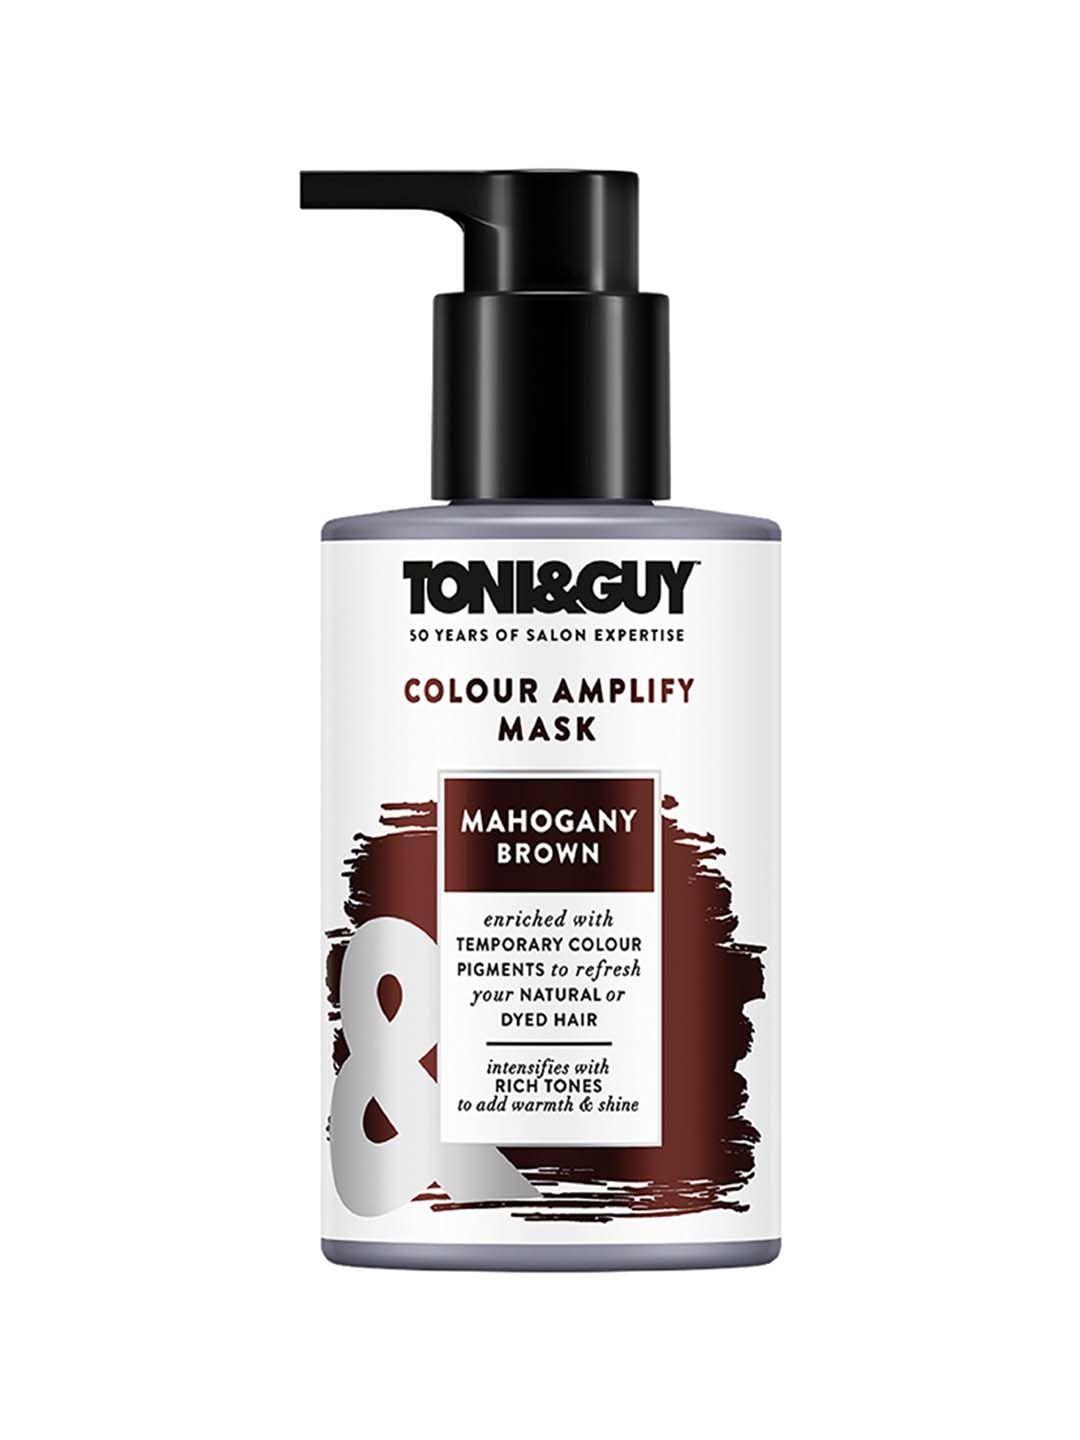 toni & guy colour amplify hair mask with argan oil 200ml - mahogany brown